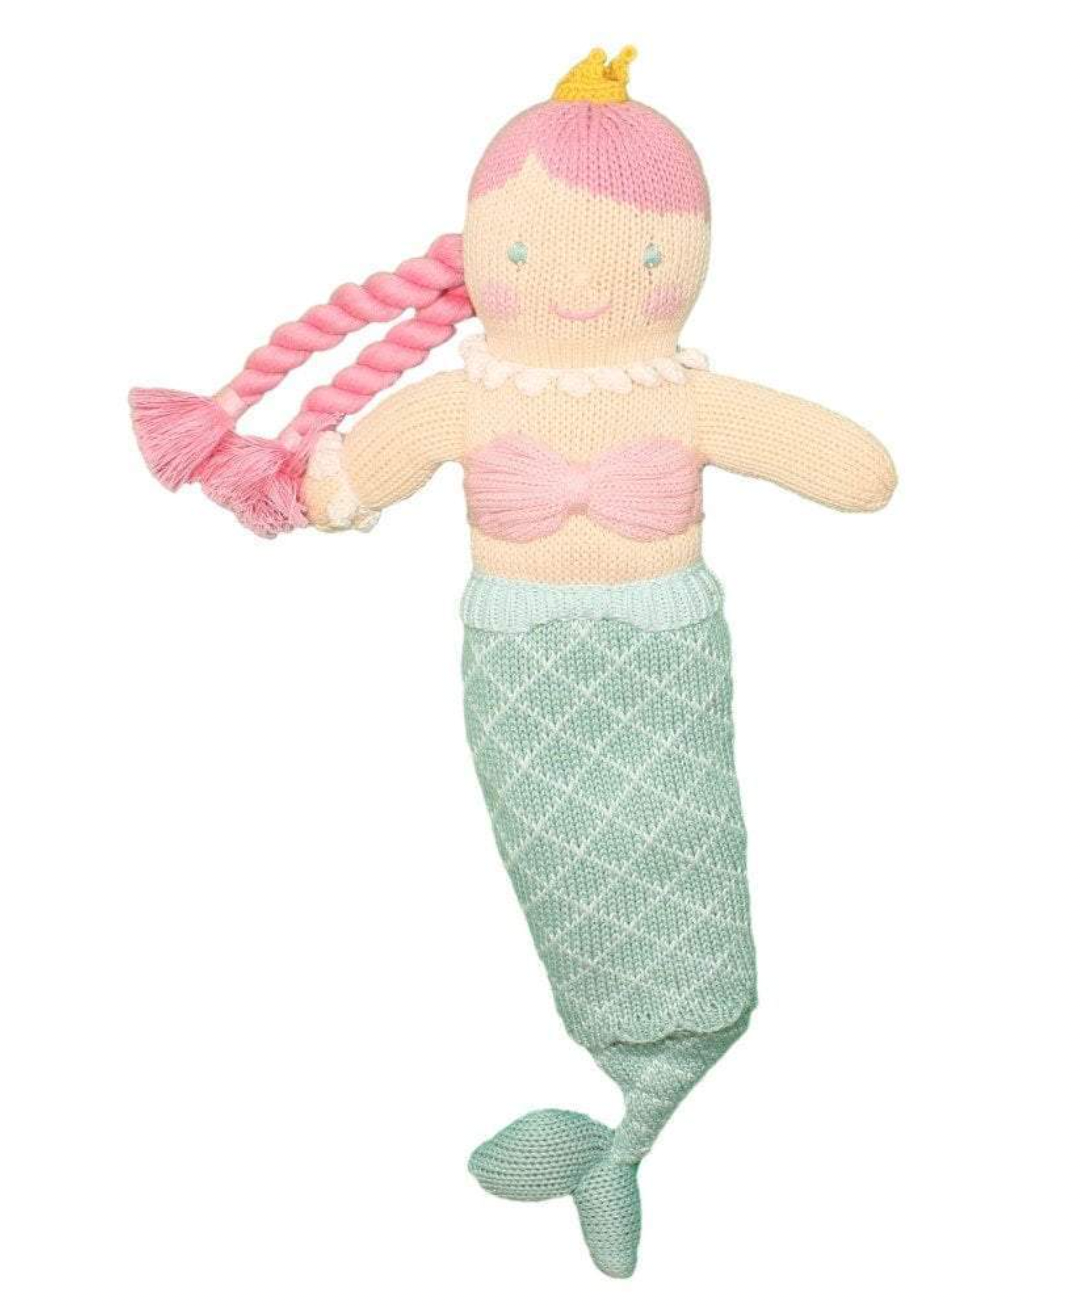 Marina the Walking Mermaid Knit Doll